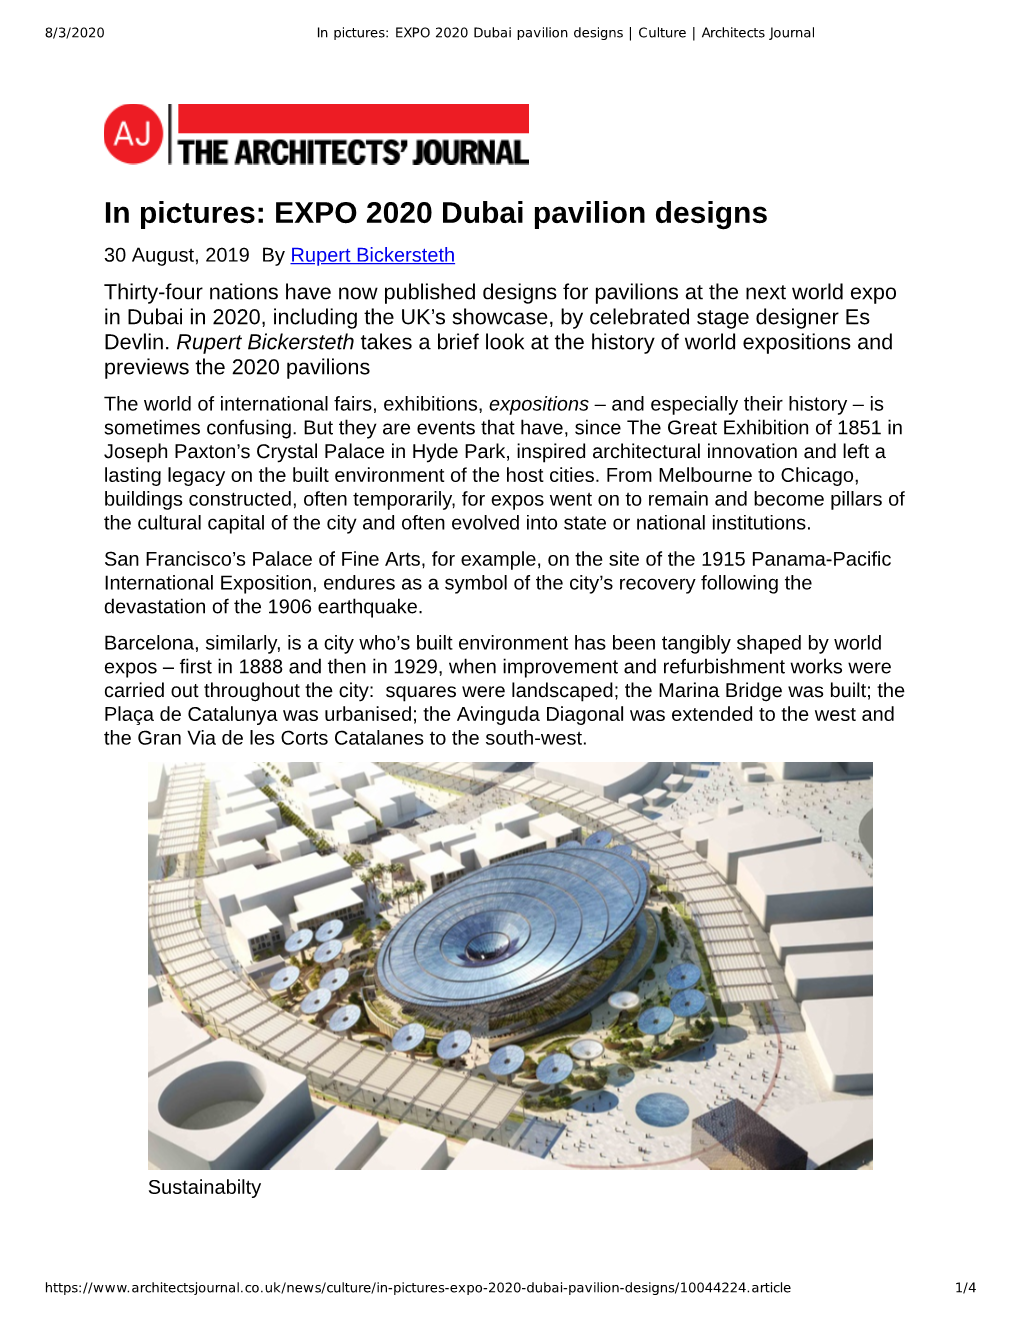 In Pictures: EXPO 2020 Dubai Pavilion Designs | Culture | Architects Journal